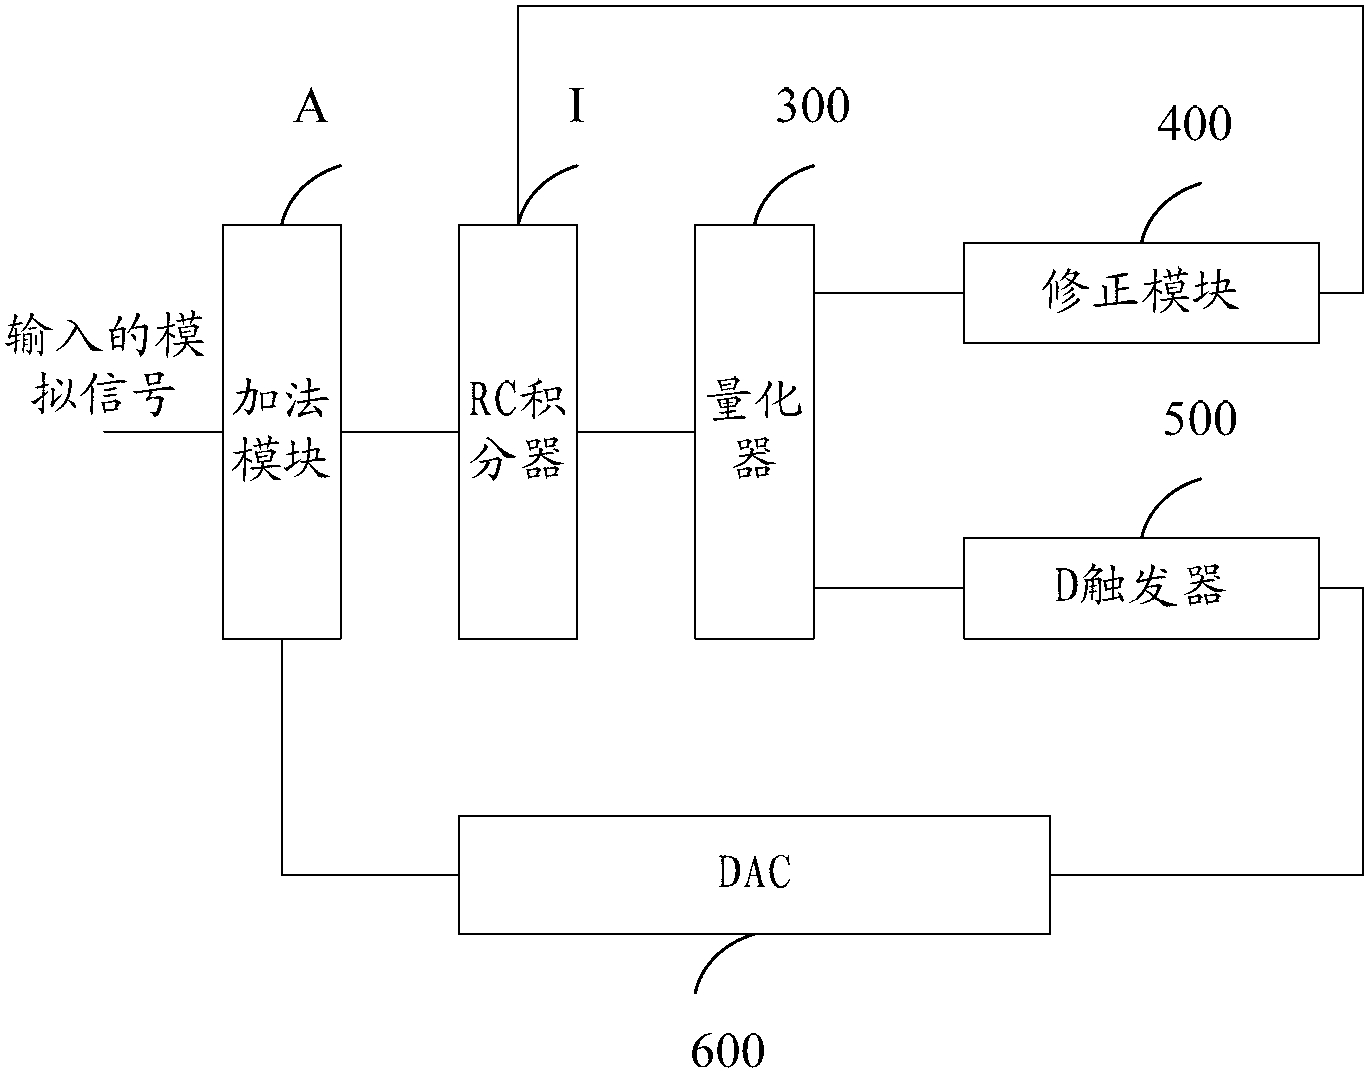 Sigma-Delta modulator and analog/digital converter